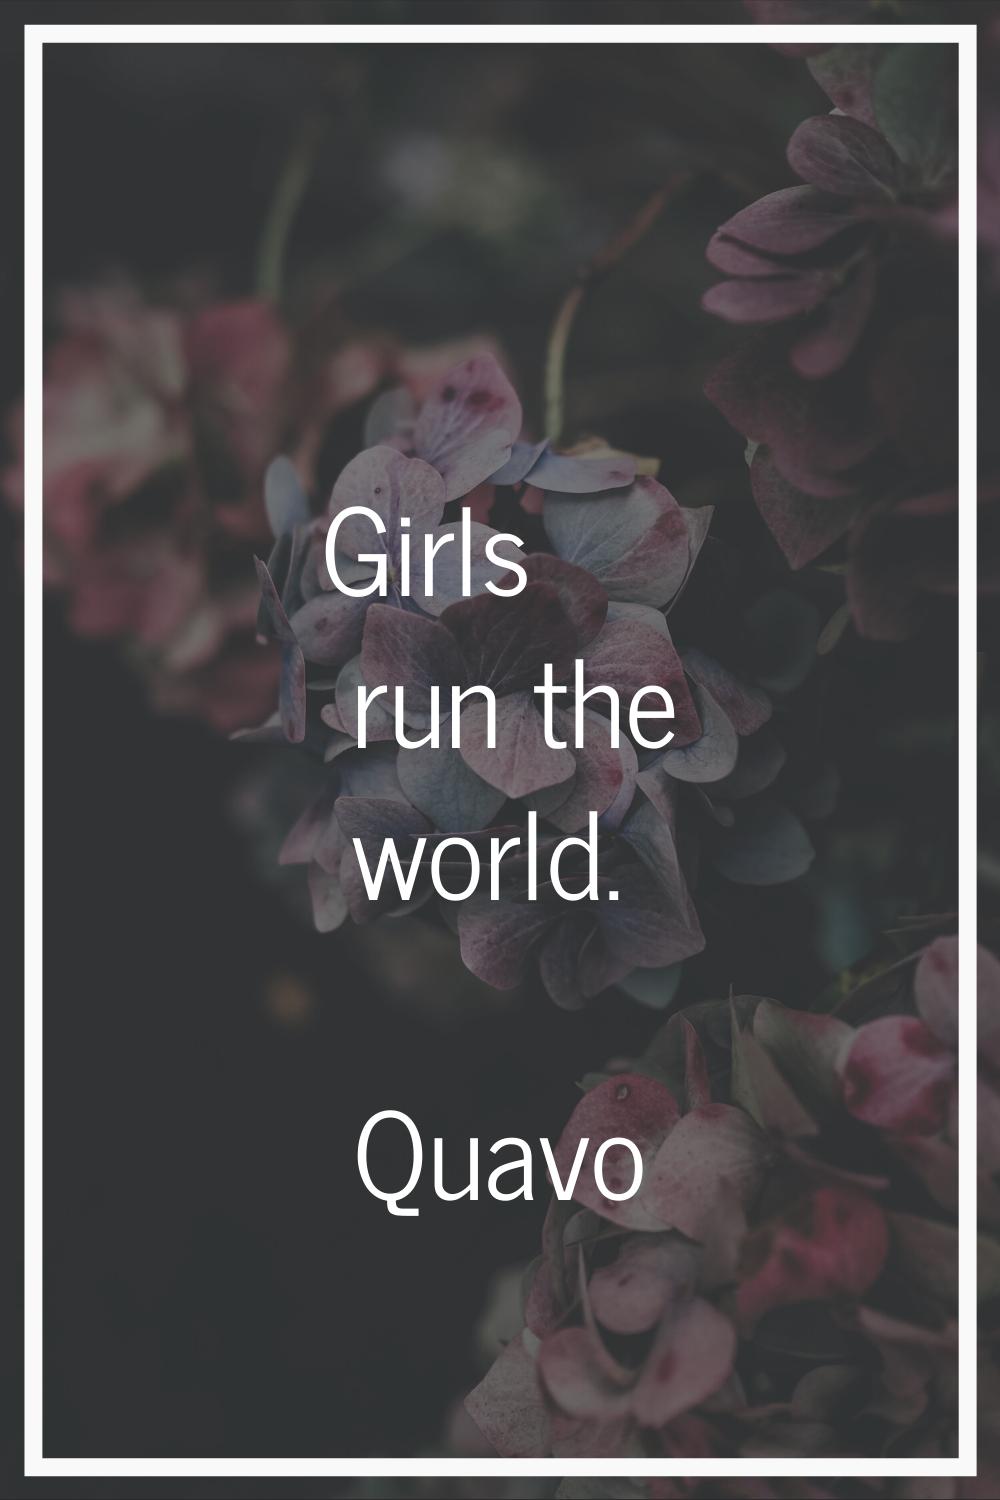 Girls run the world.